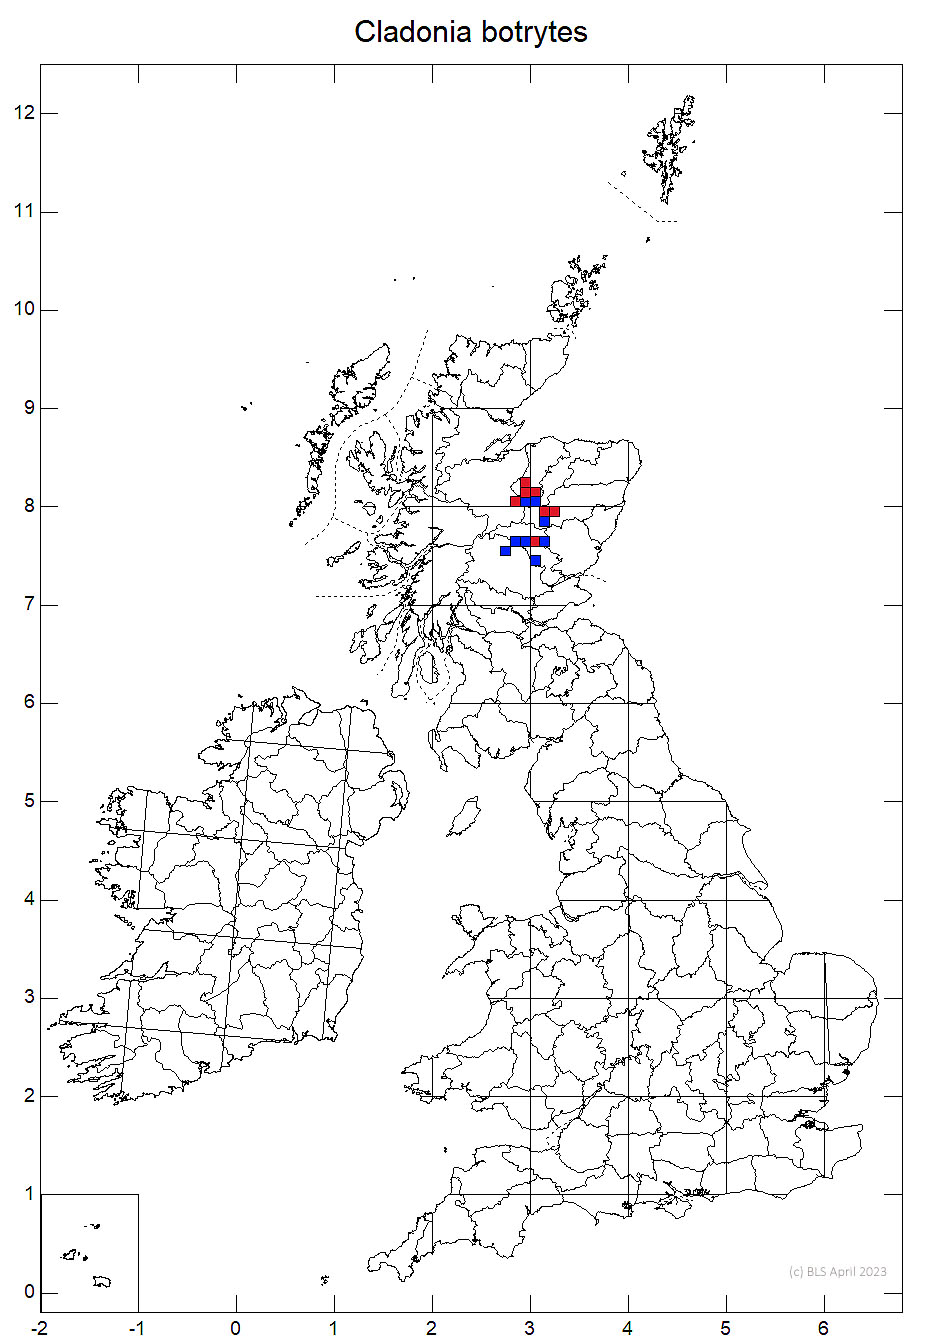 Cladonia botrytes 10km sq distribution map